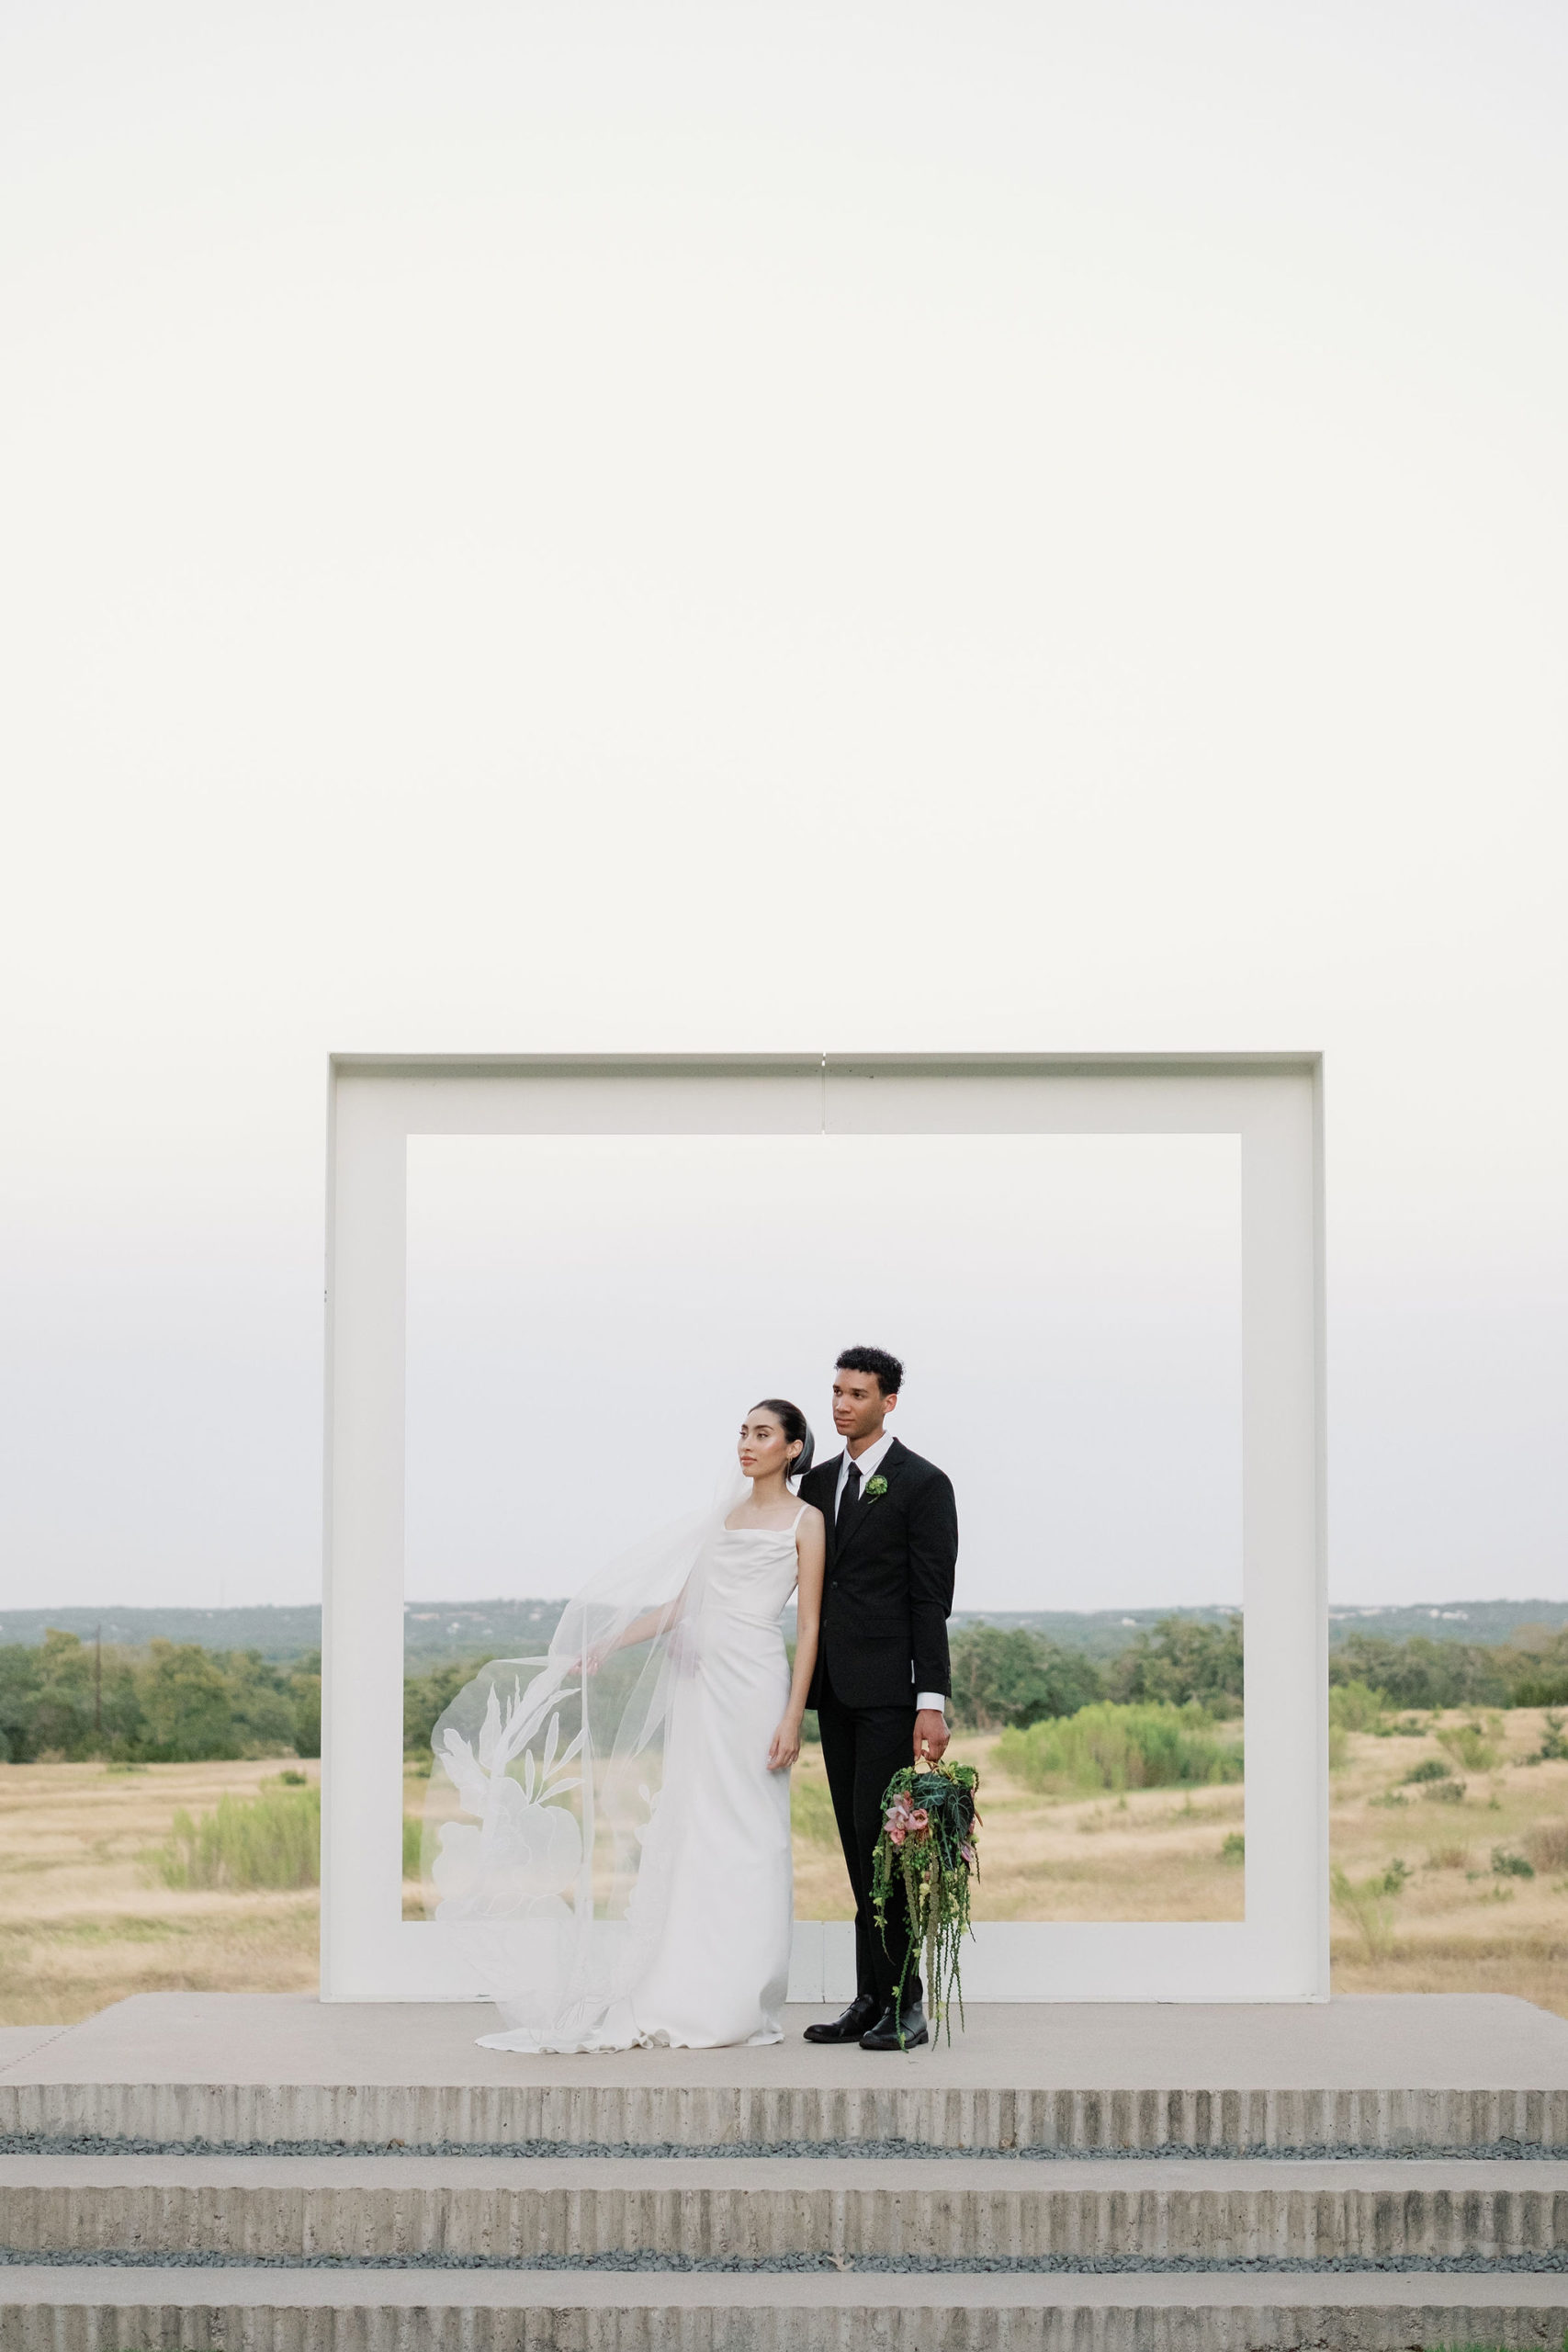 Cynthia and Jackson’s Magical Fall Boho Wedding in North Carolina by Melody Strider Photography